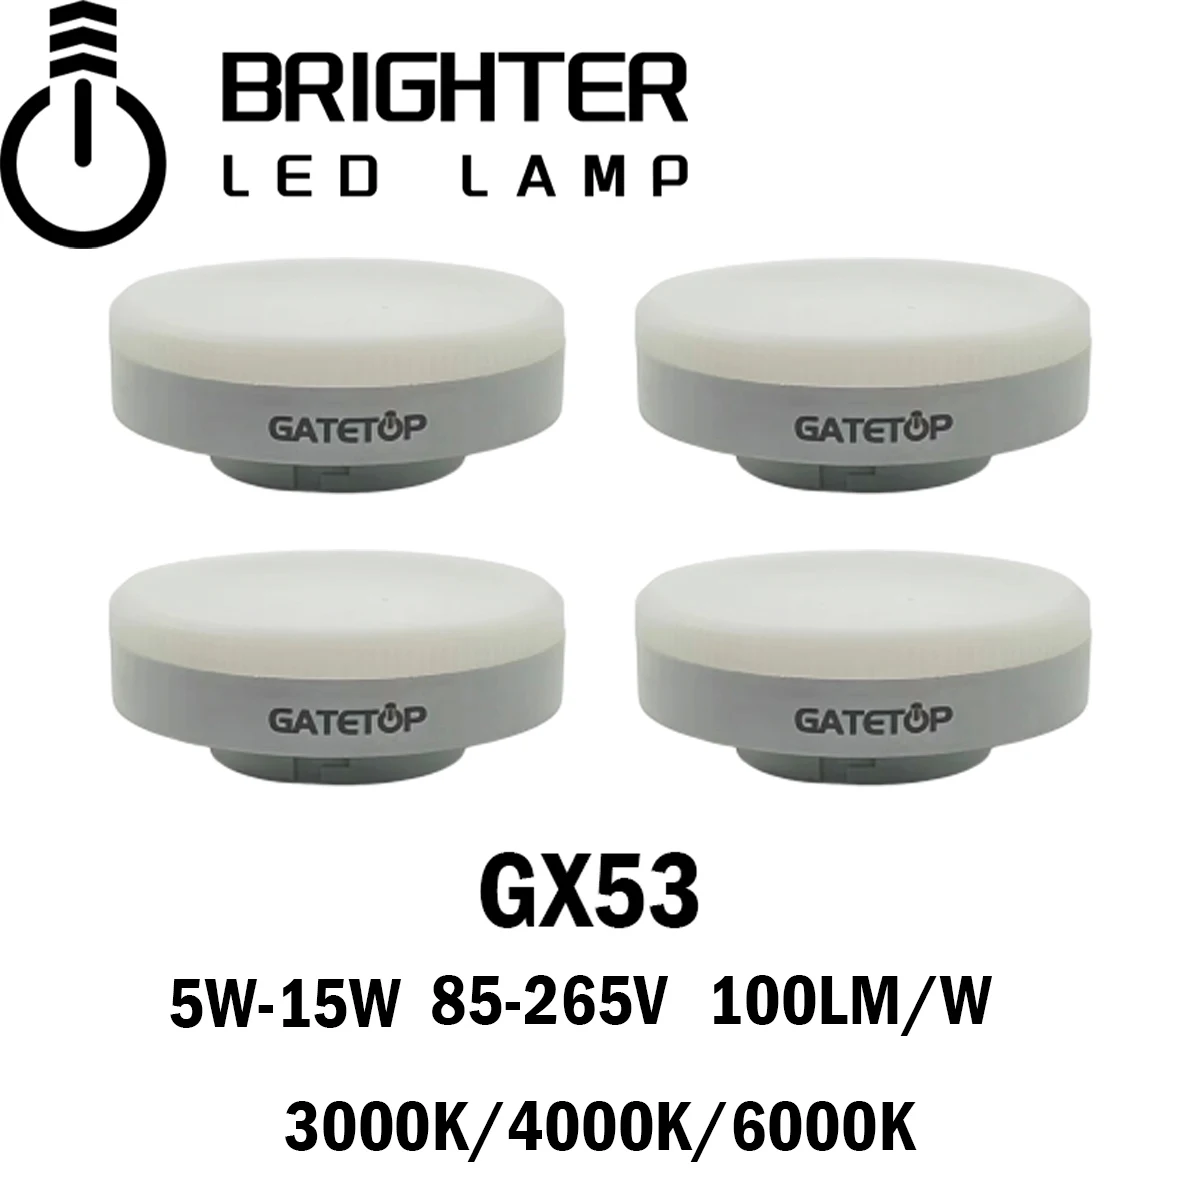 8pcs LED spotlight GX53 wardrobe light grille light AC85-265V 5W-15W no flickering 100LM/W warm white light suitable for kitchen